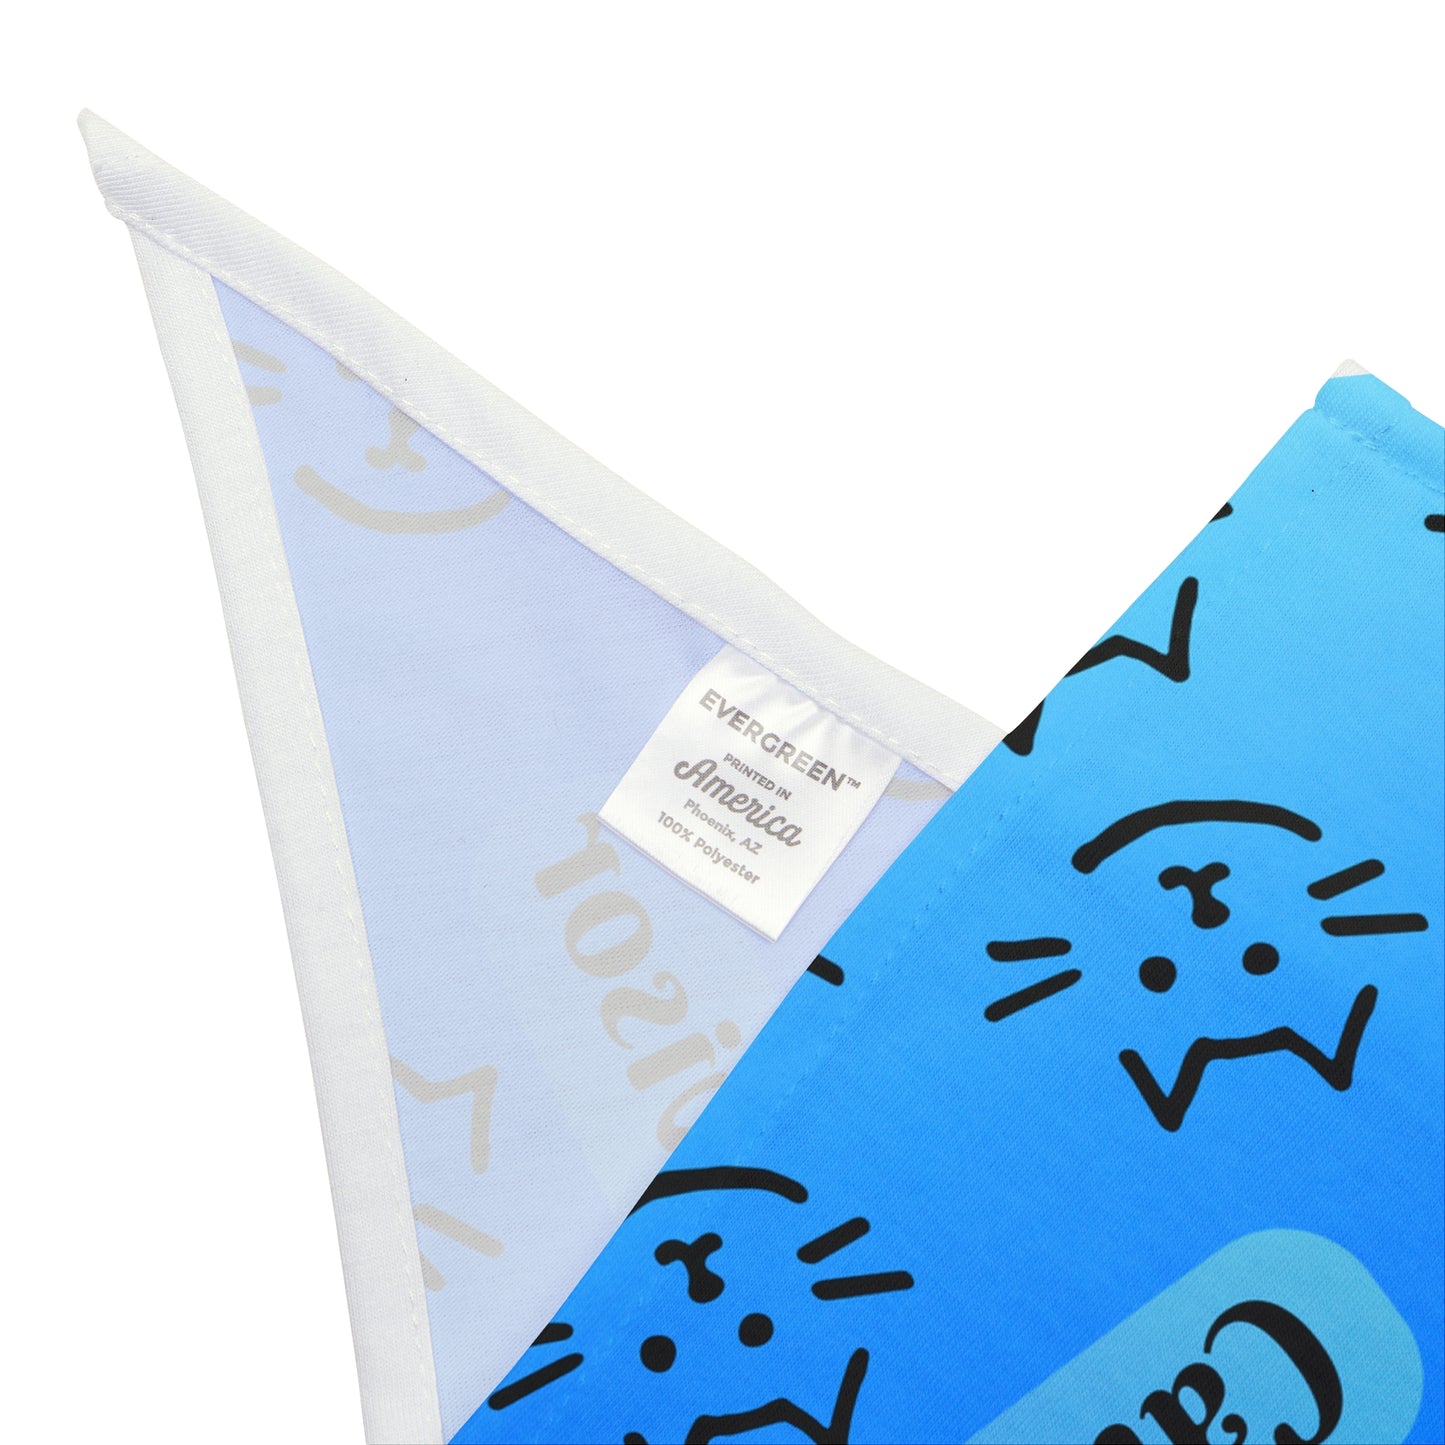 FurryFashionista Pet Bandana, "Cat Supervisor" Style, Bright Blue Sublimation Design, Fun Cat Patternn